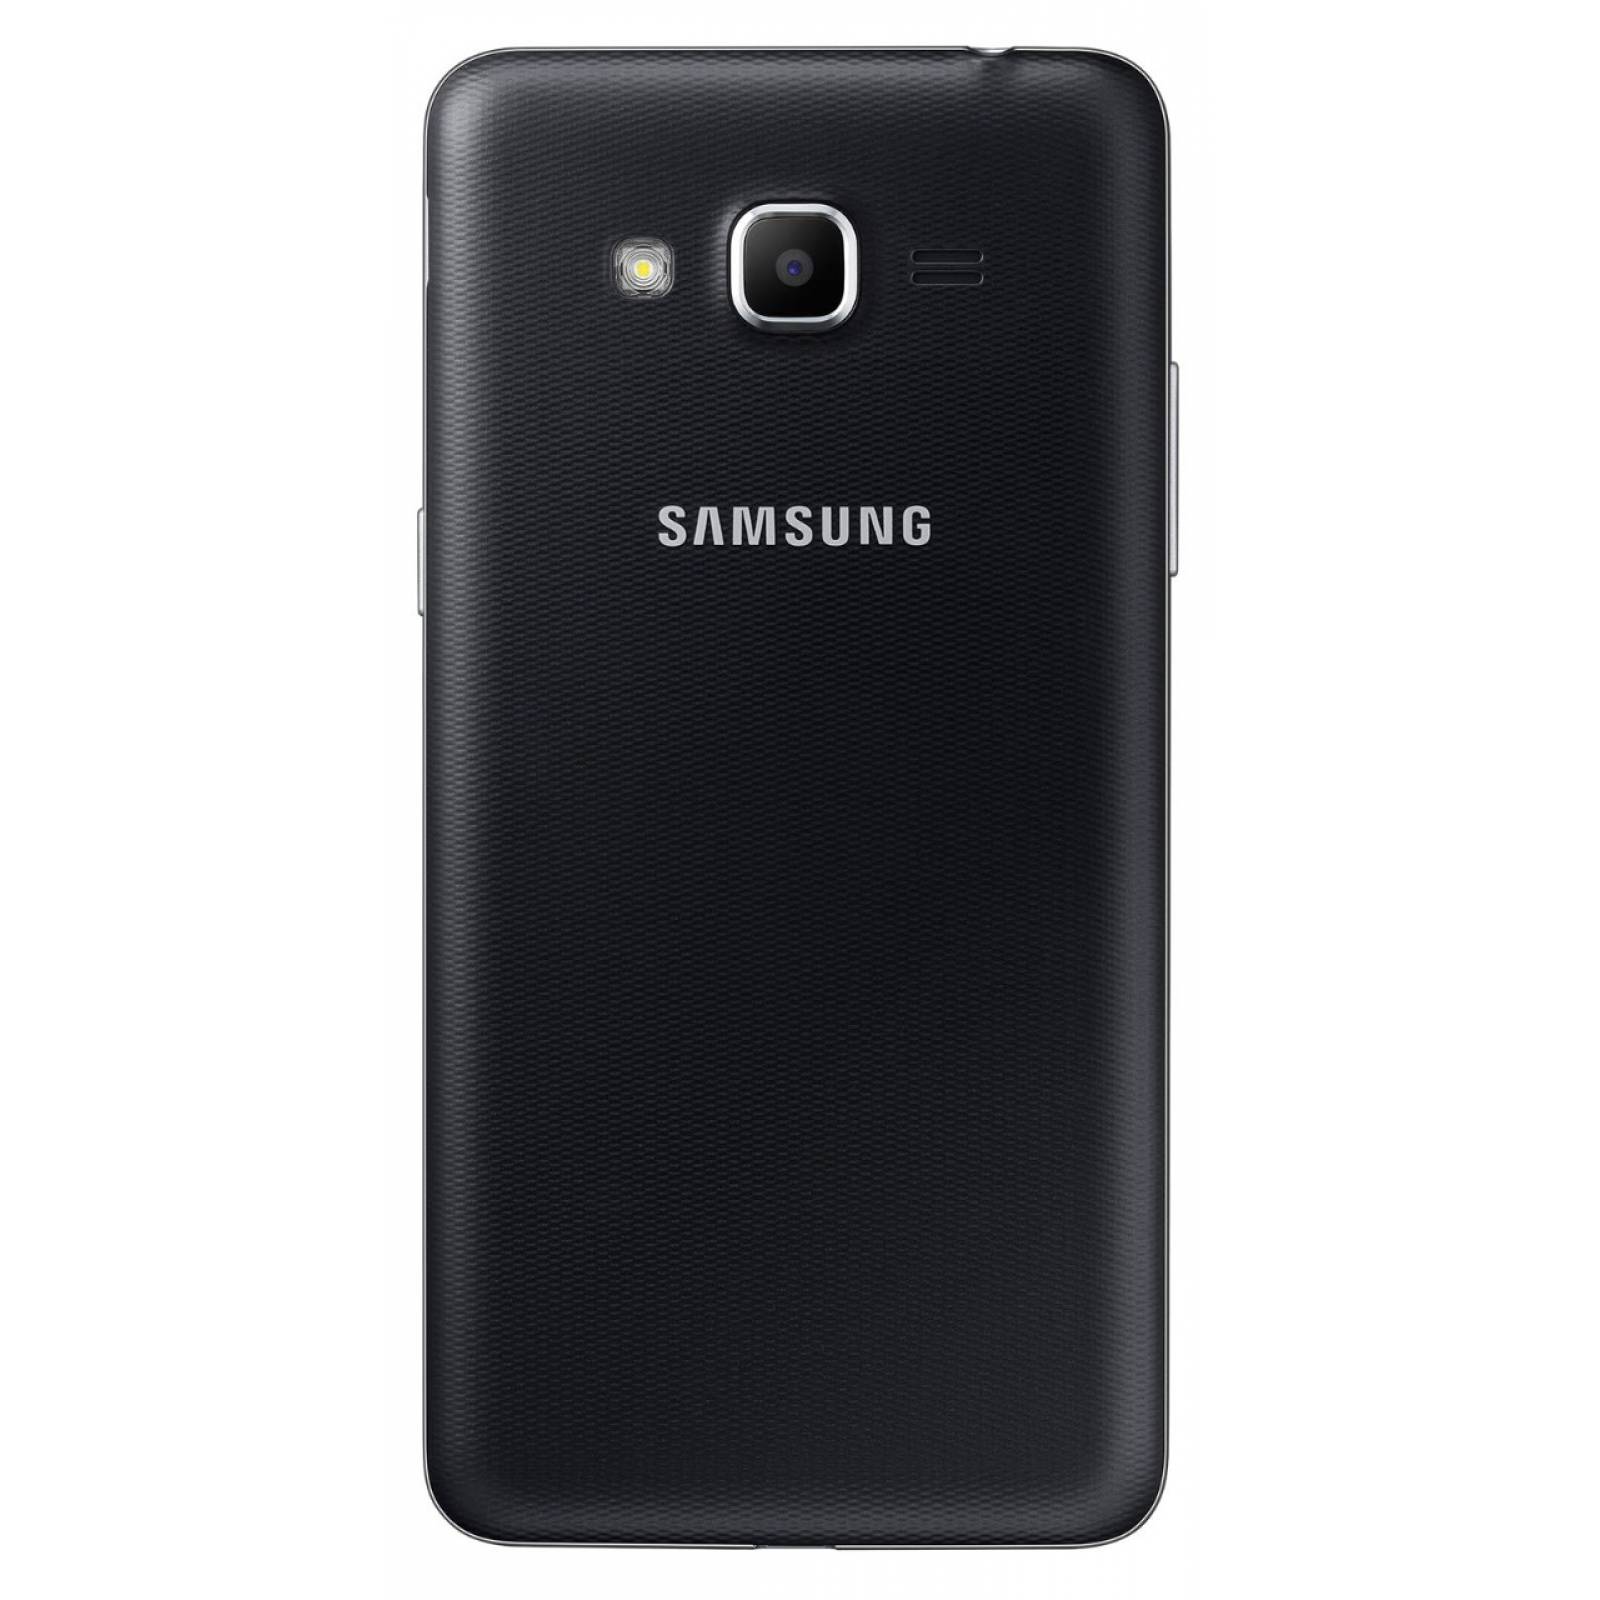 Celular LTE 16GB GALAXY GRAND PRIME + Color Negro (Telcel)